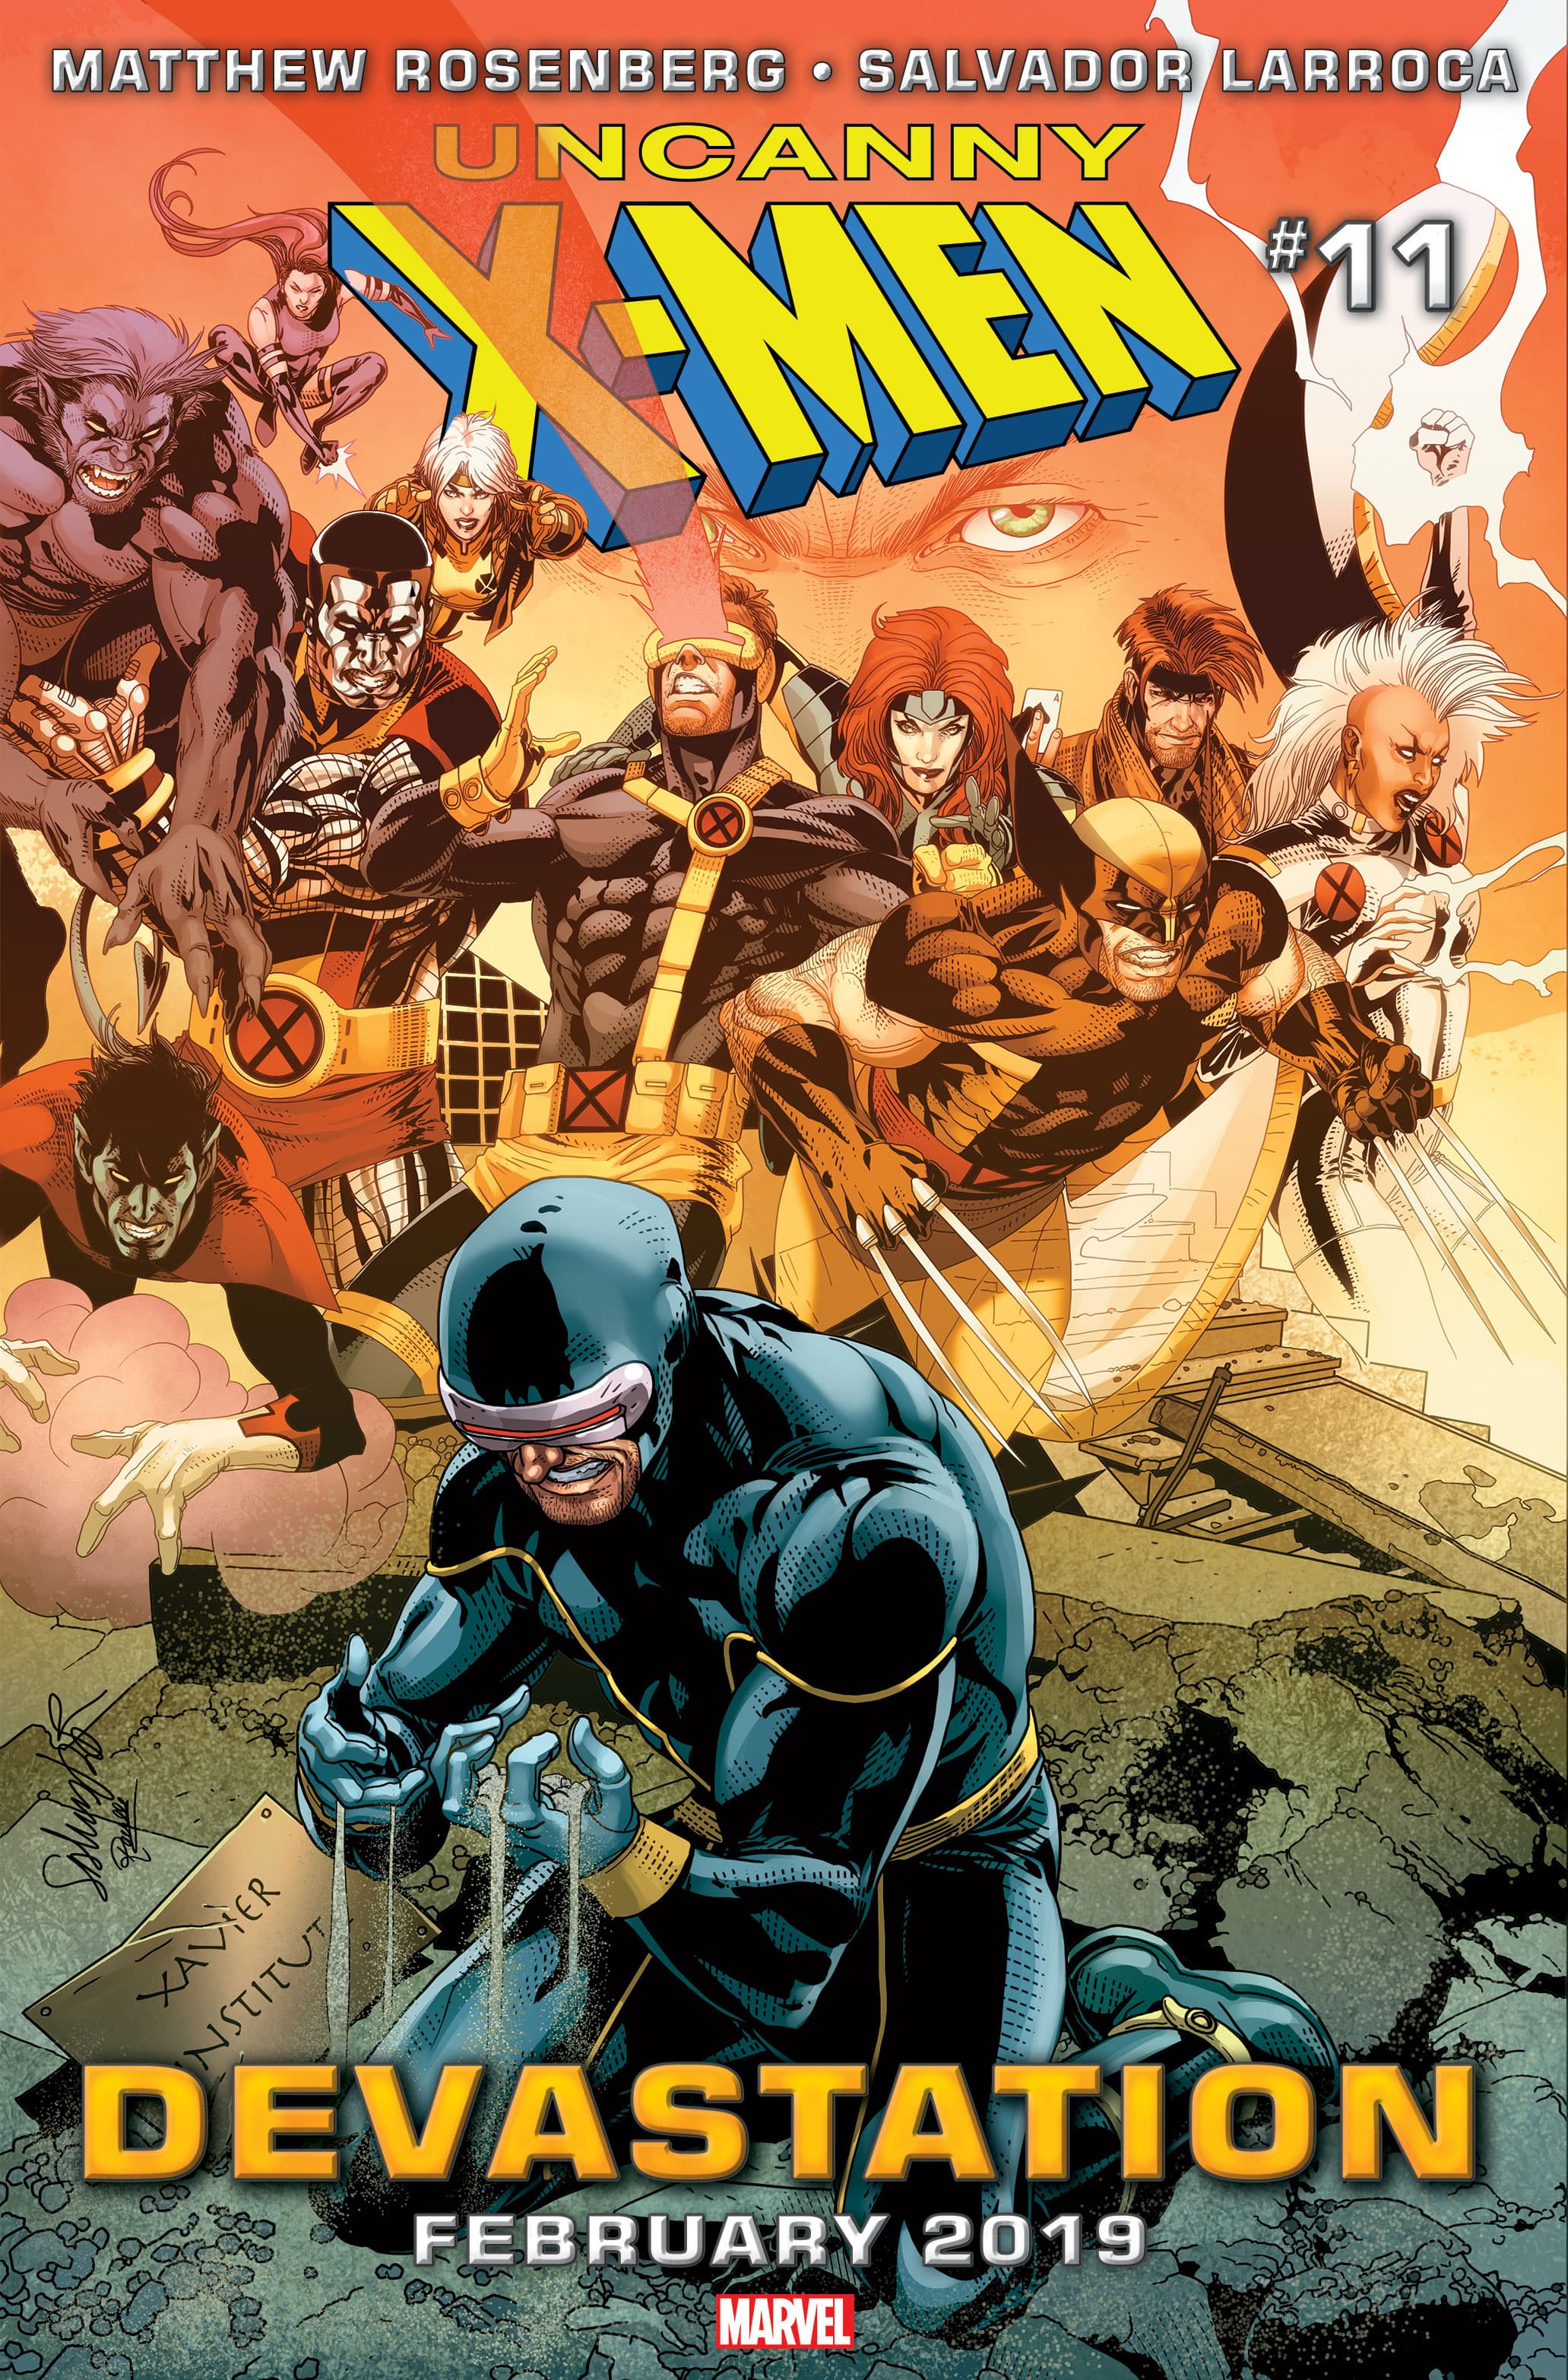 Uncanny X-Men #11: DEVASTATION